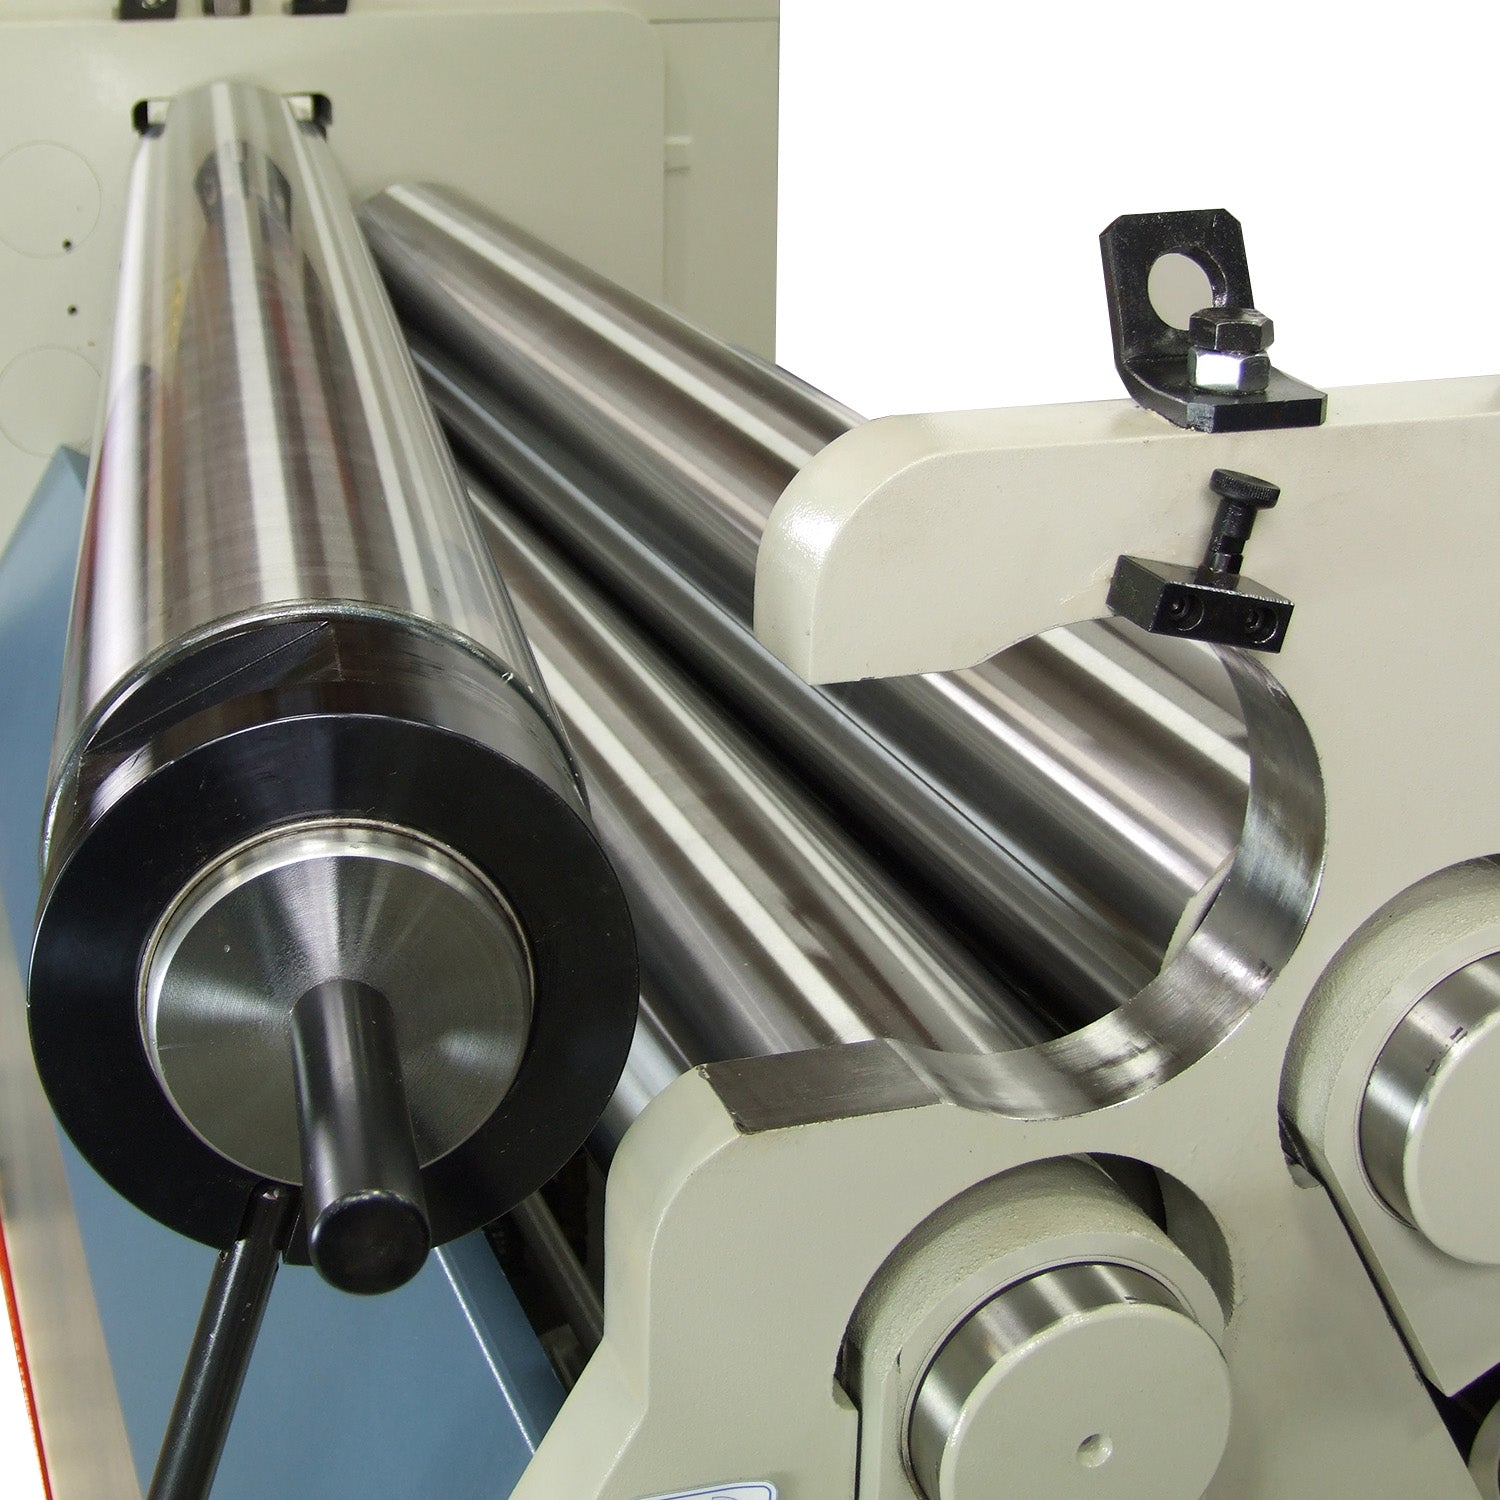 Baileigh PR-403 220V 3 Phase Hydraulic Plate Roll 4' Length 3 Gauge (1/4") Mild Steel Capacity